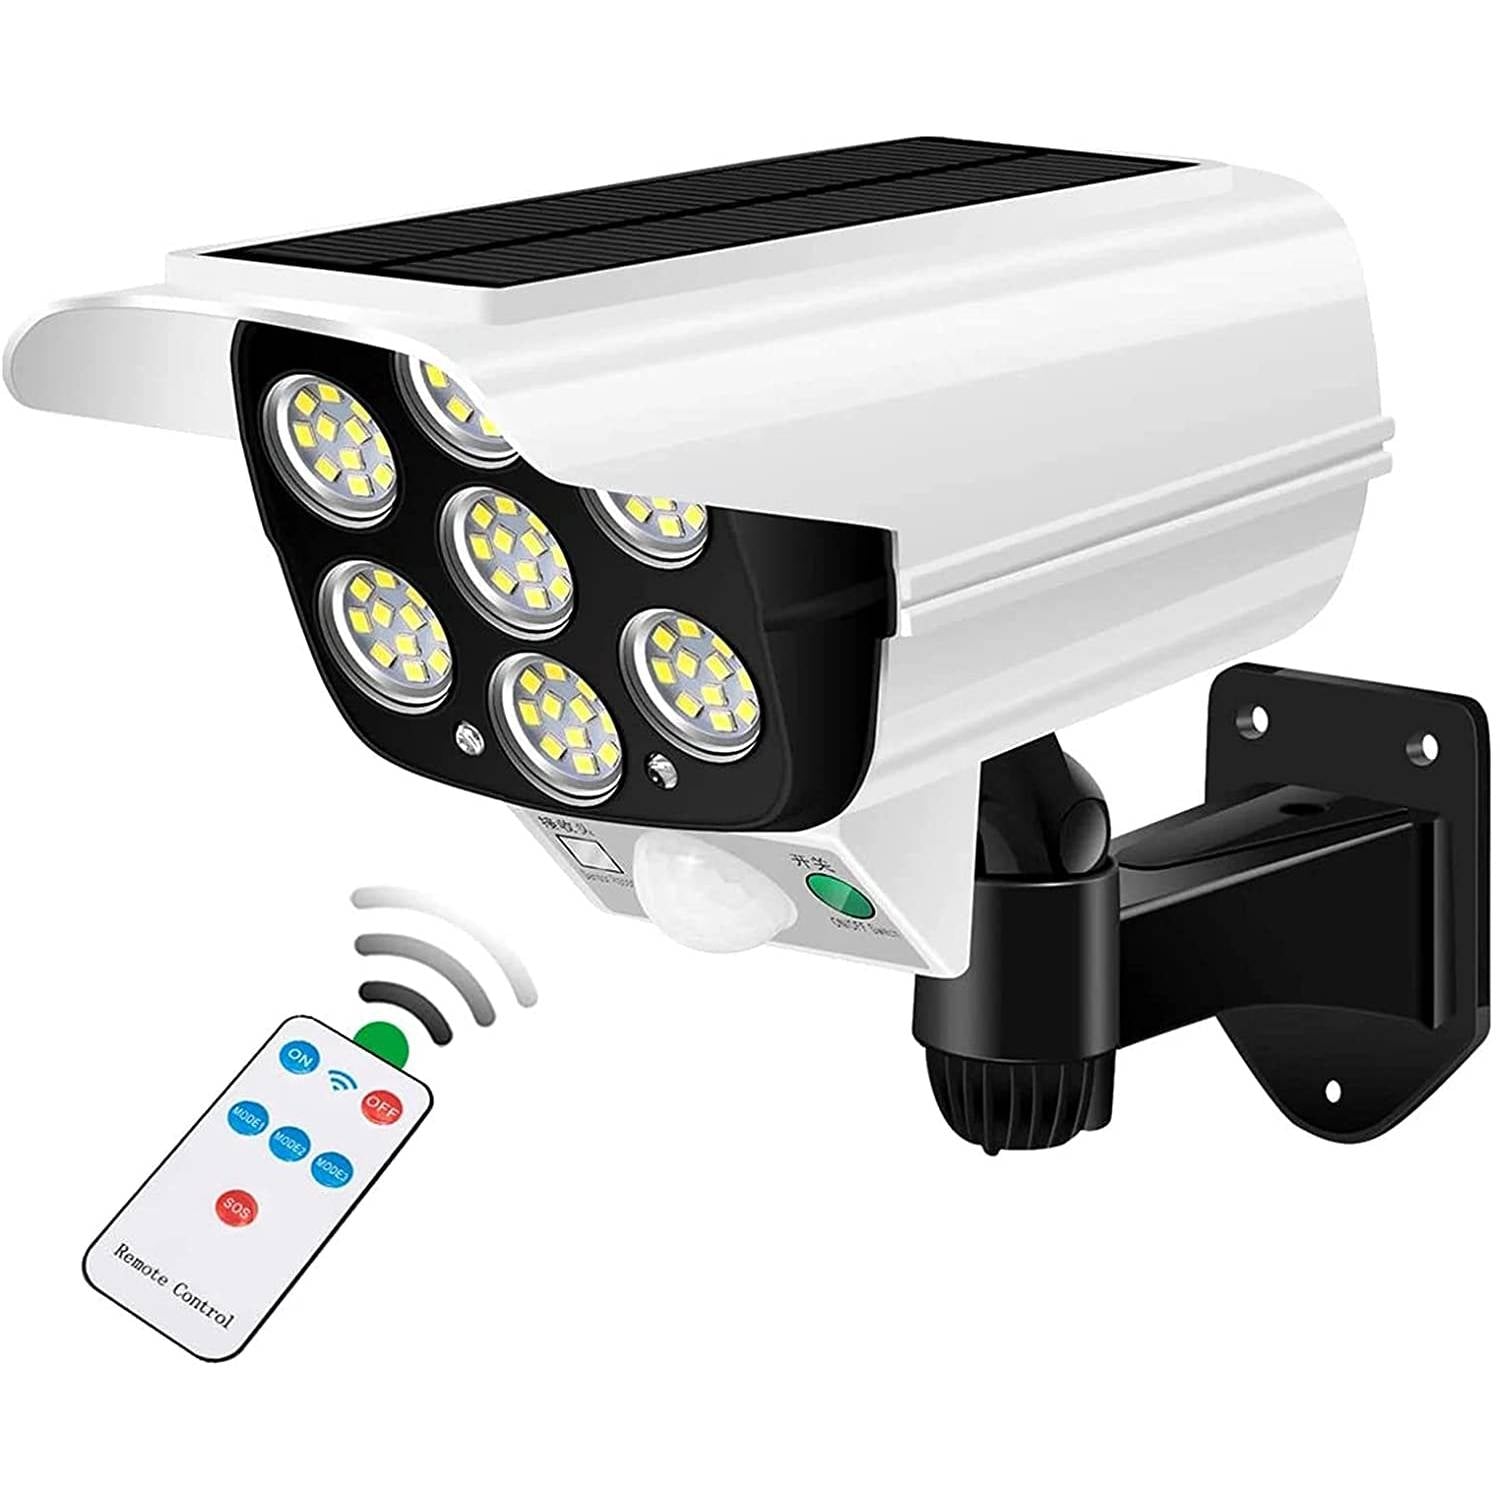 Home security, CCTV cameras & solutions